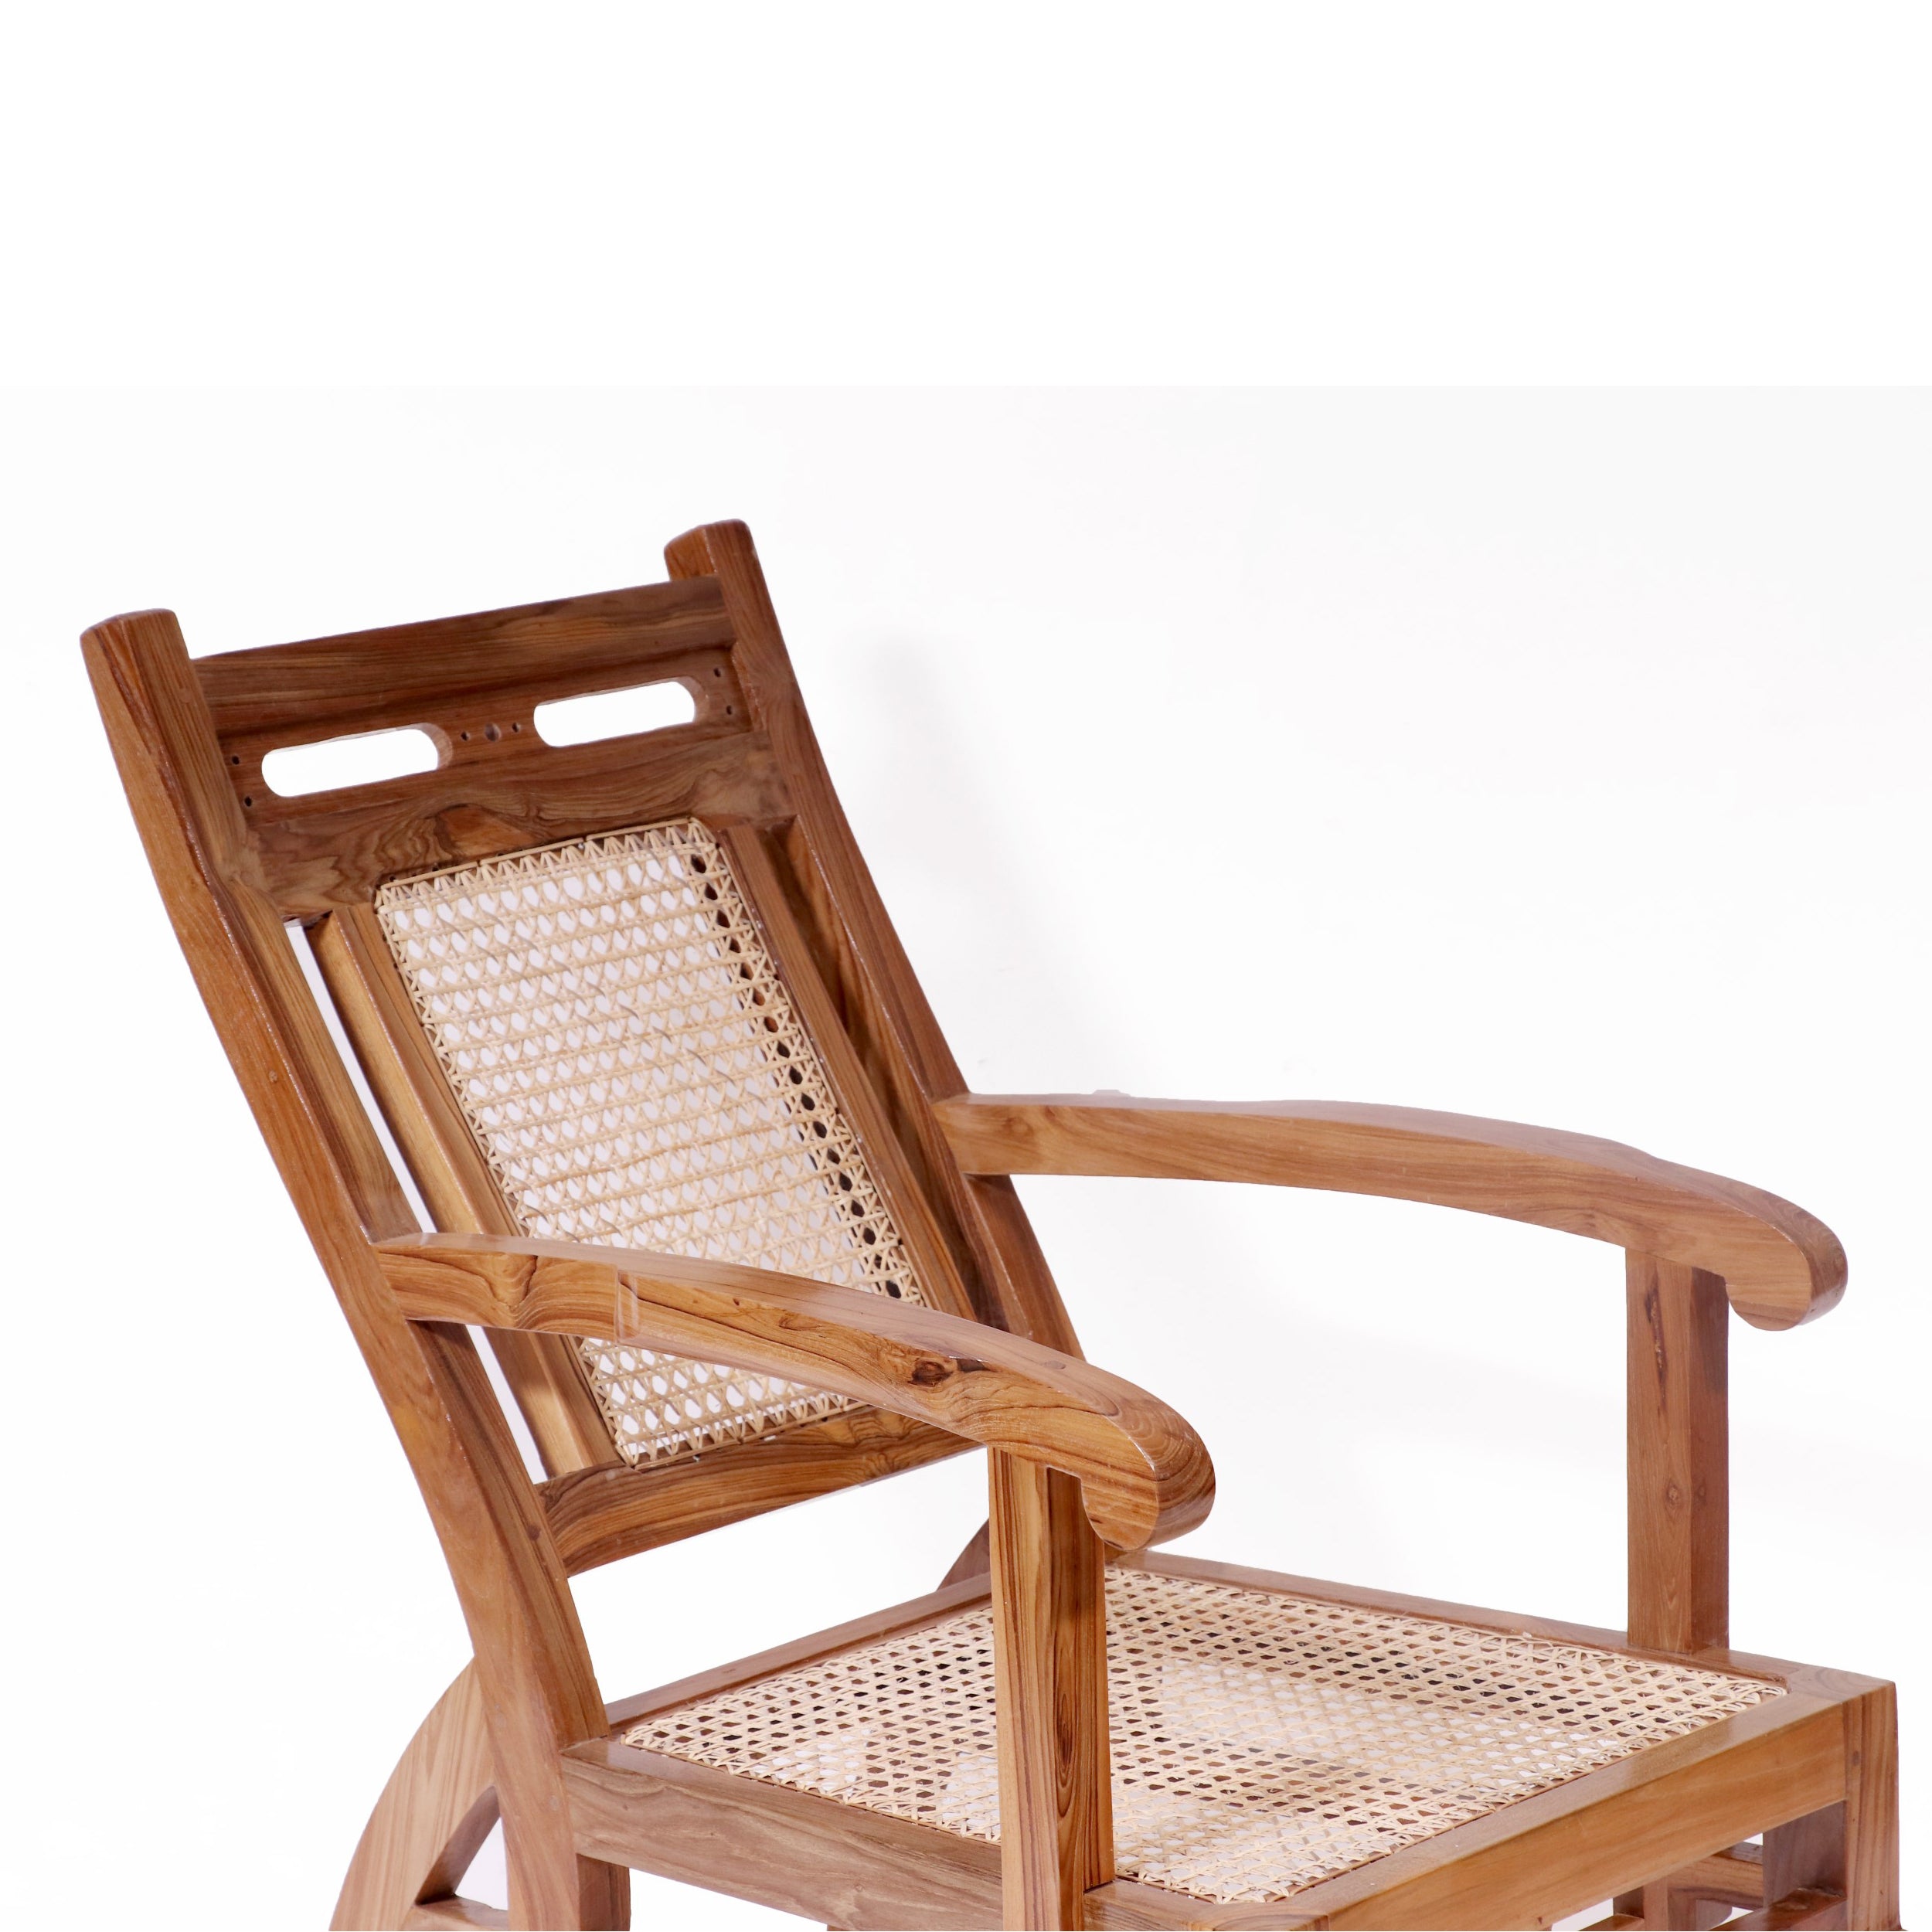 Teak wood cane back Chair Easy Chair